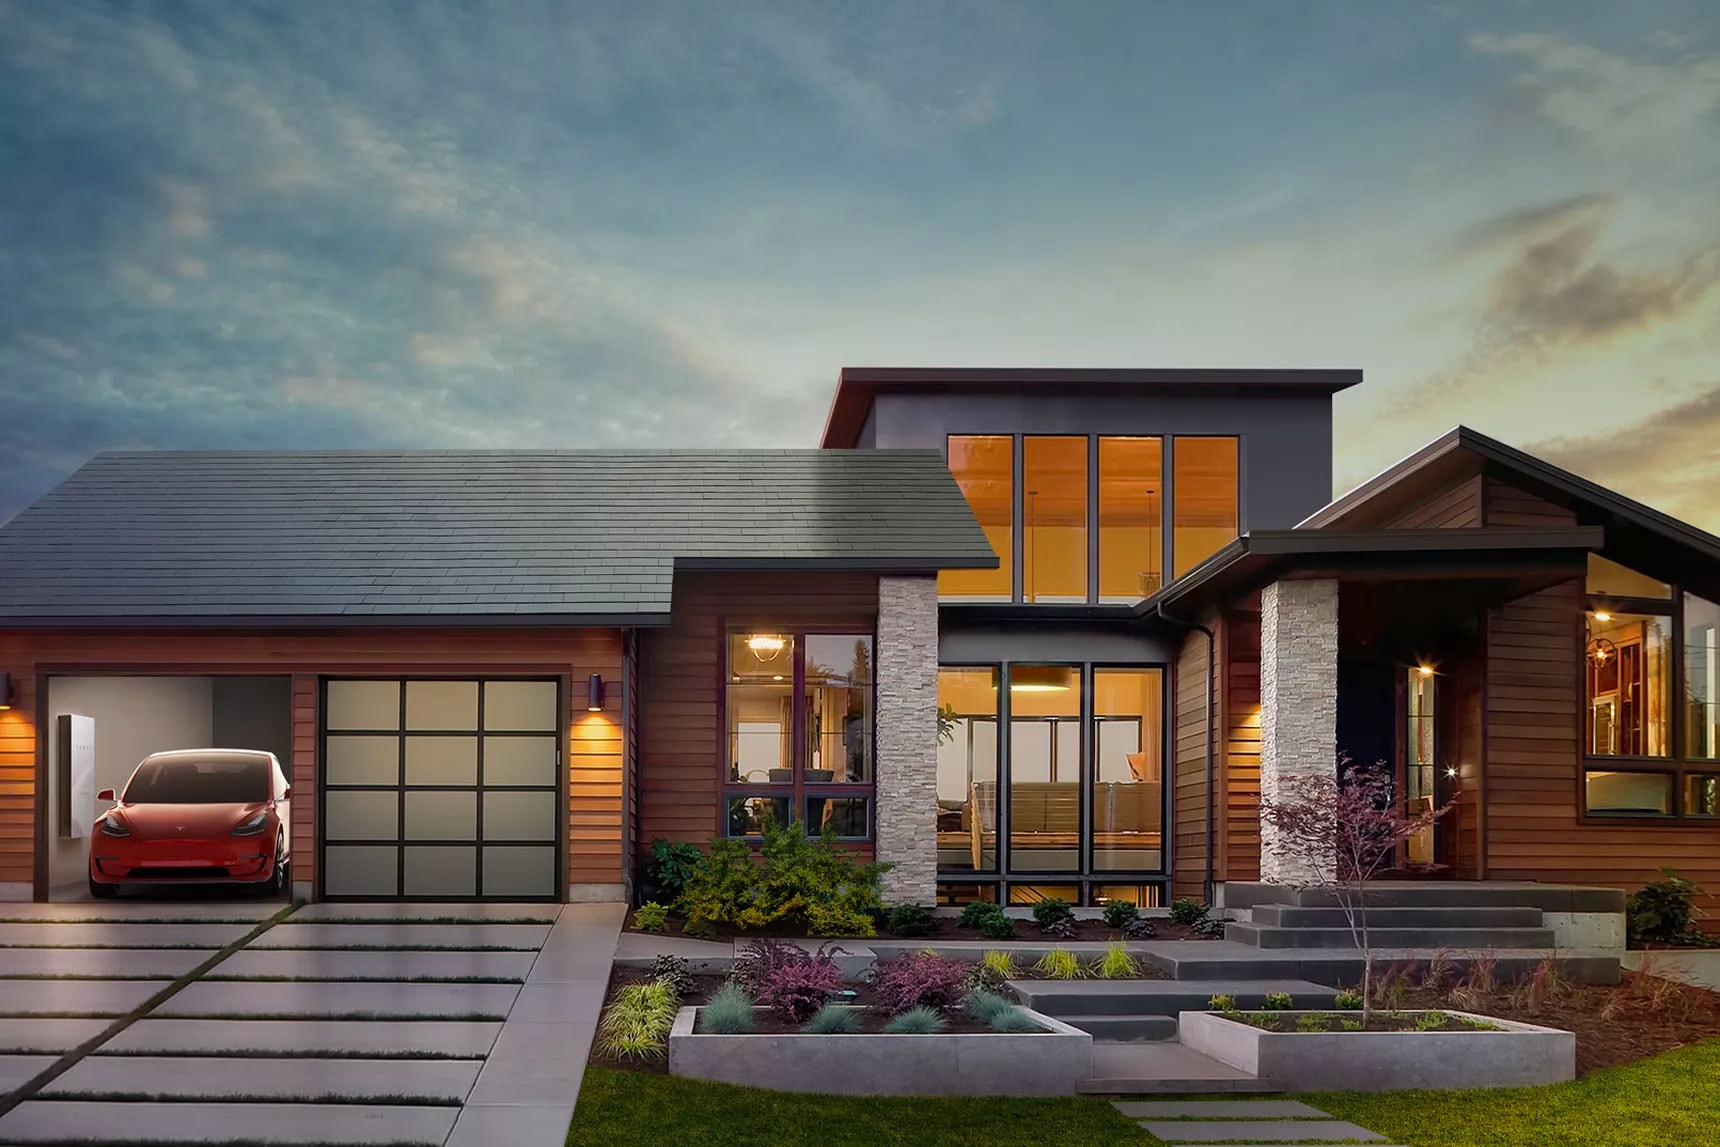 Tesla Powerwall Solar Panels home tile roof